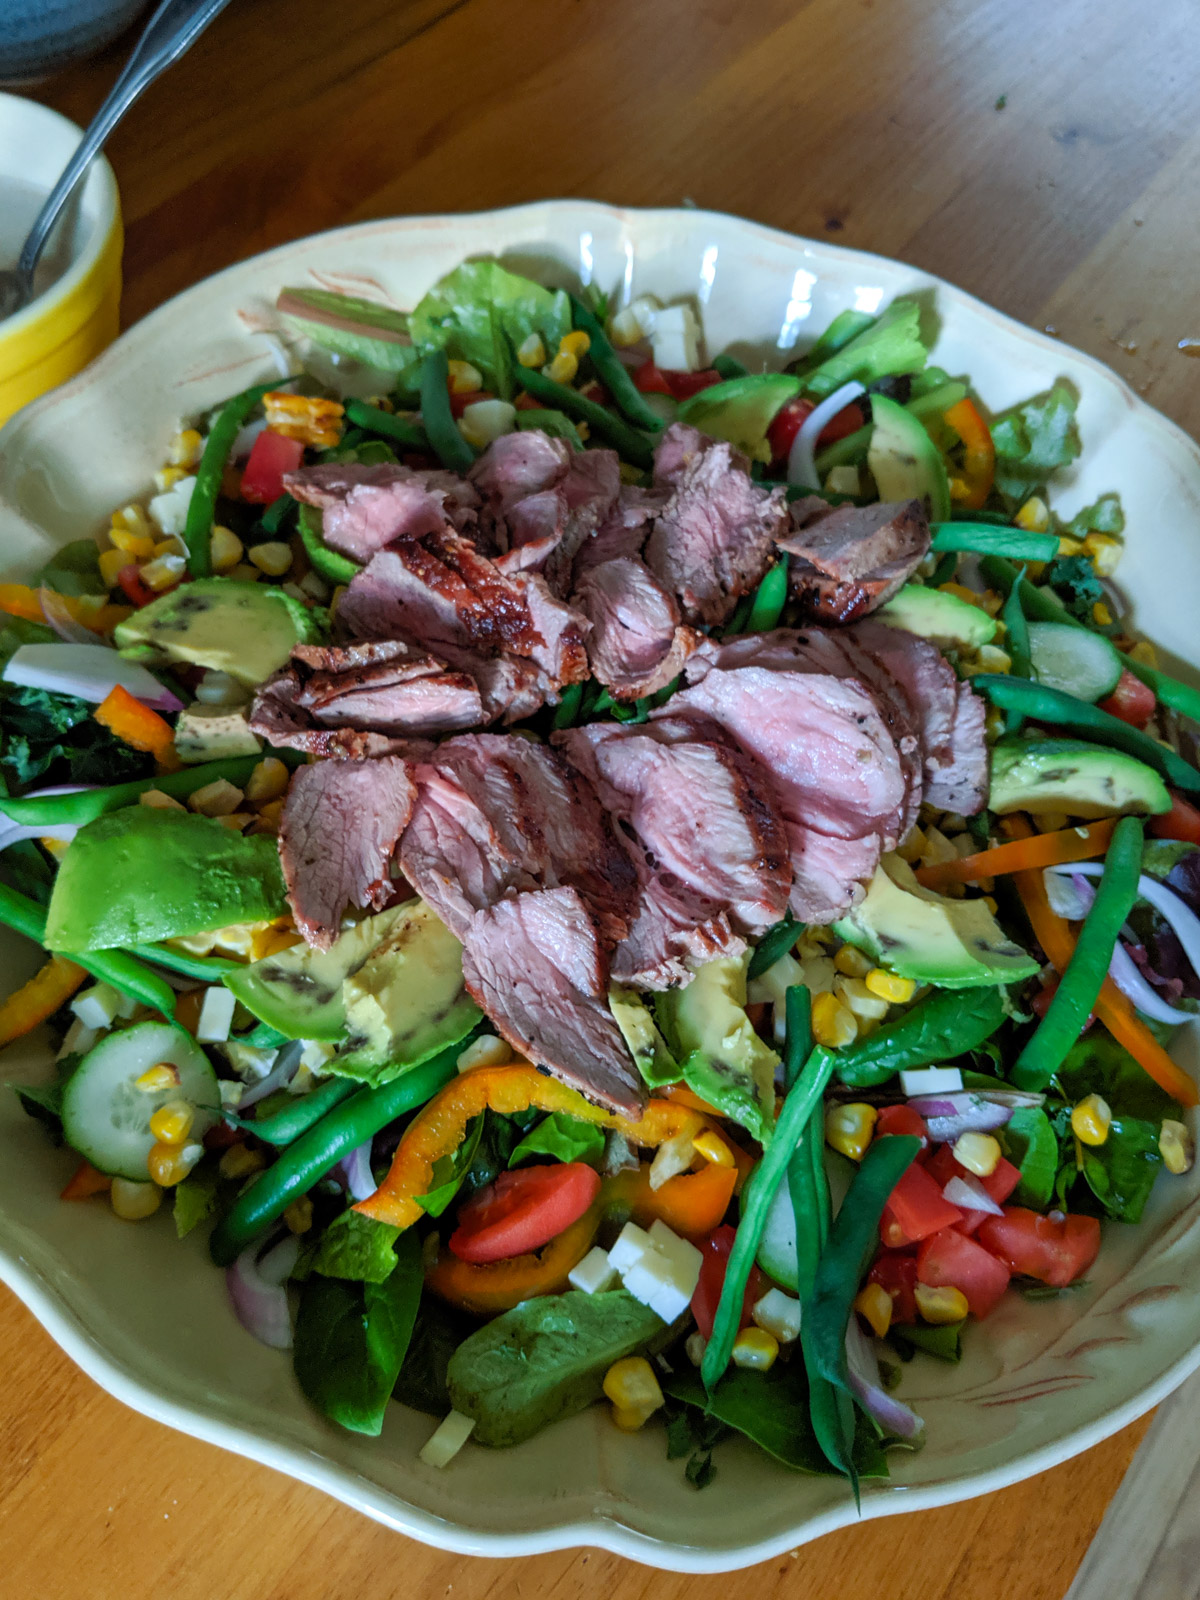 Garden fresh salad topped with sliced steak.